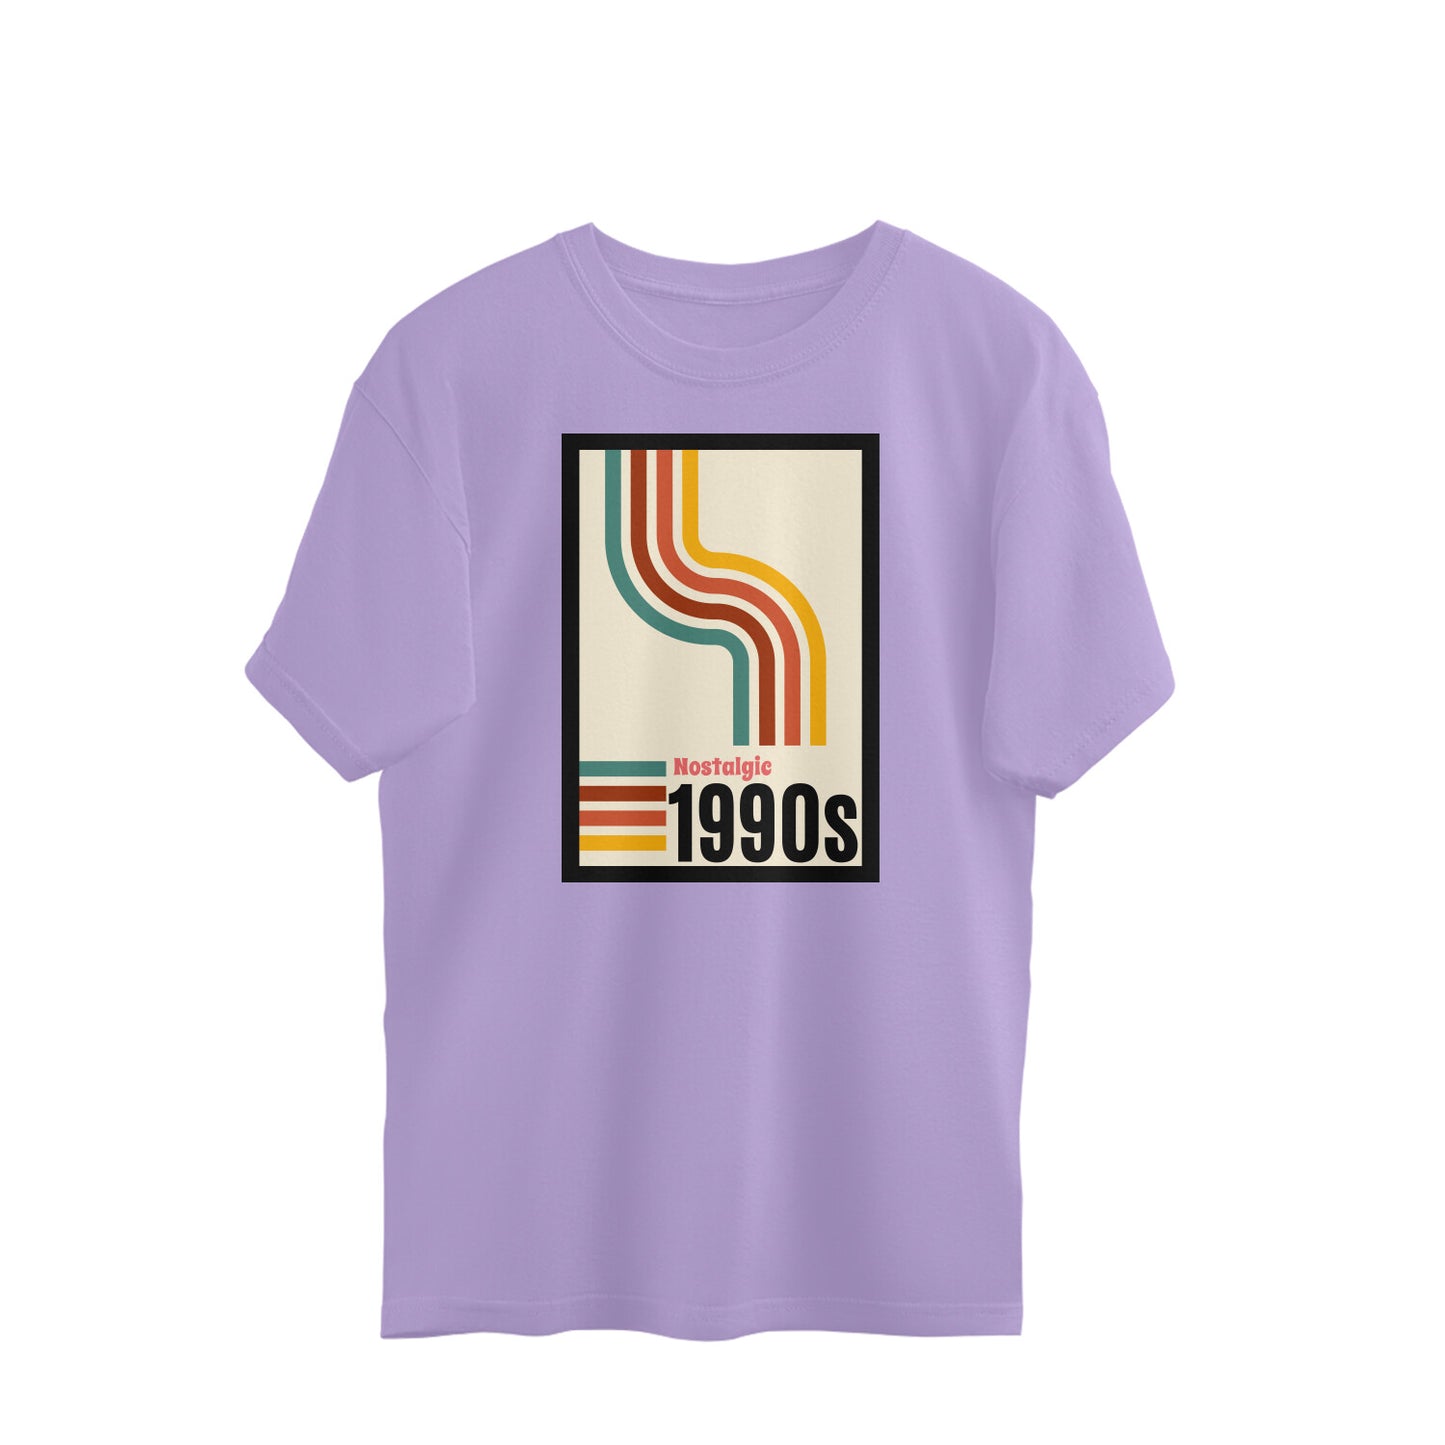 Bilkool Nostolgic 1990s Oversized T-Shirts